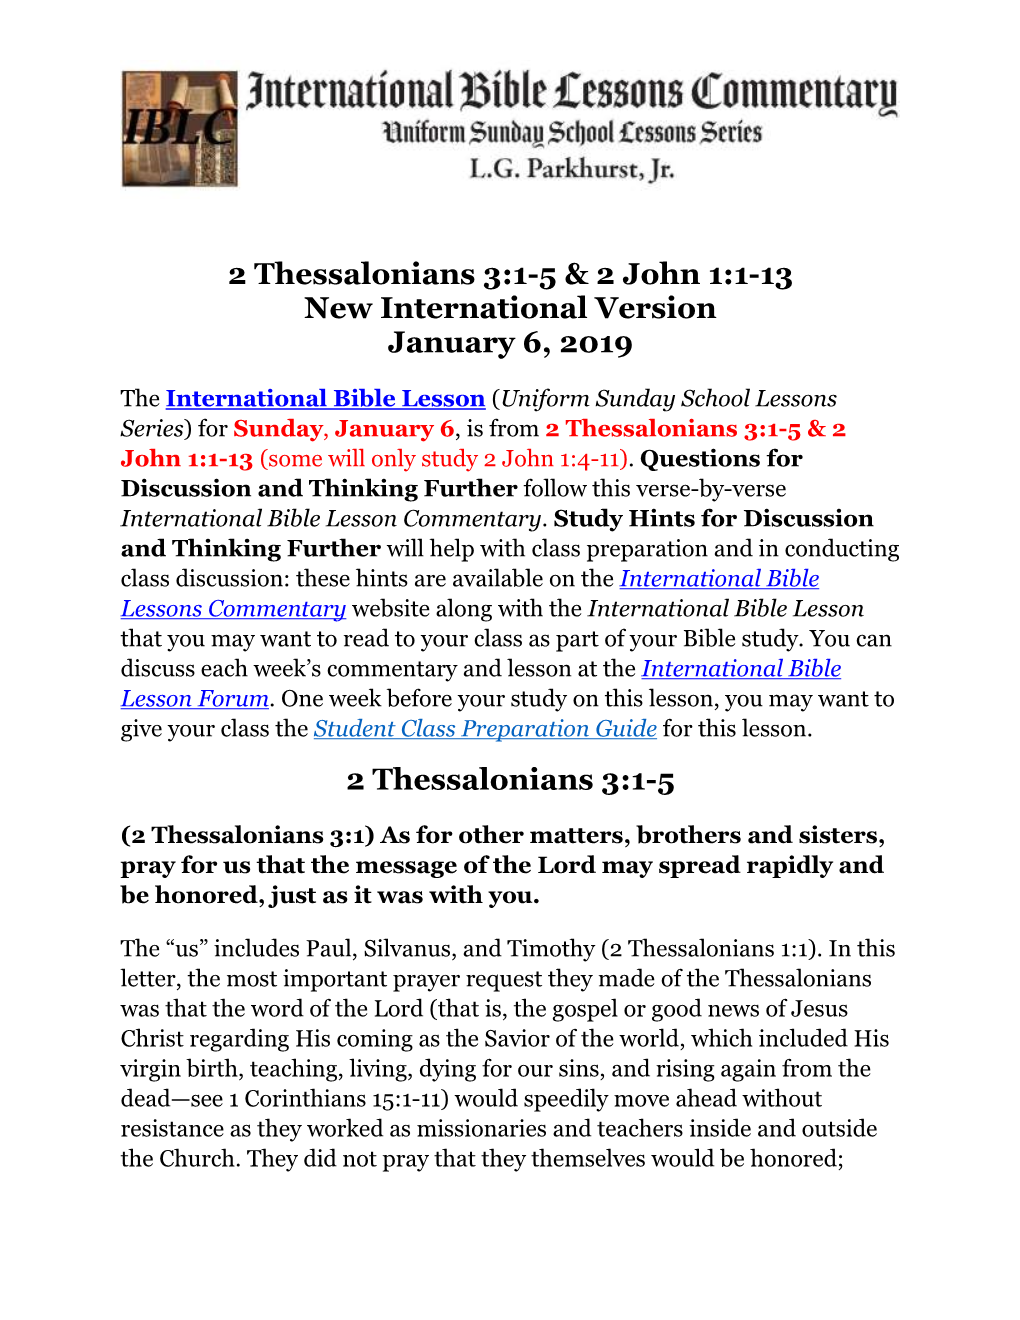 2 Thessalonians 3:1-5 & 2 John 1:1-13 New International Version January 6, 2019